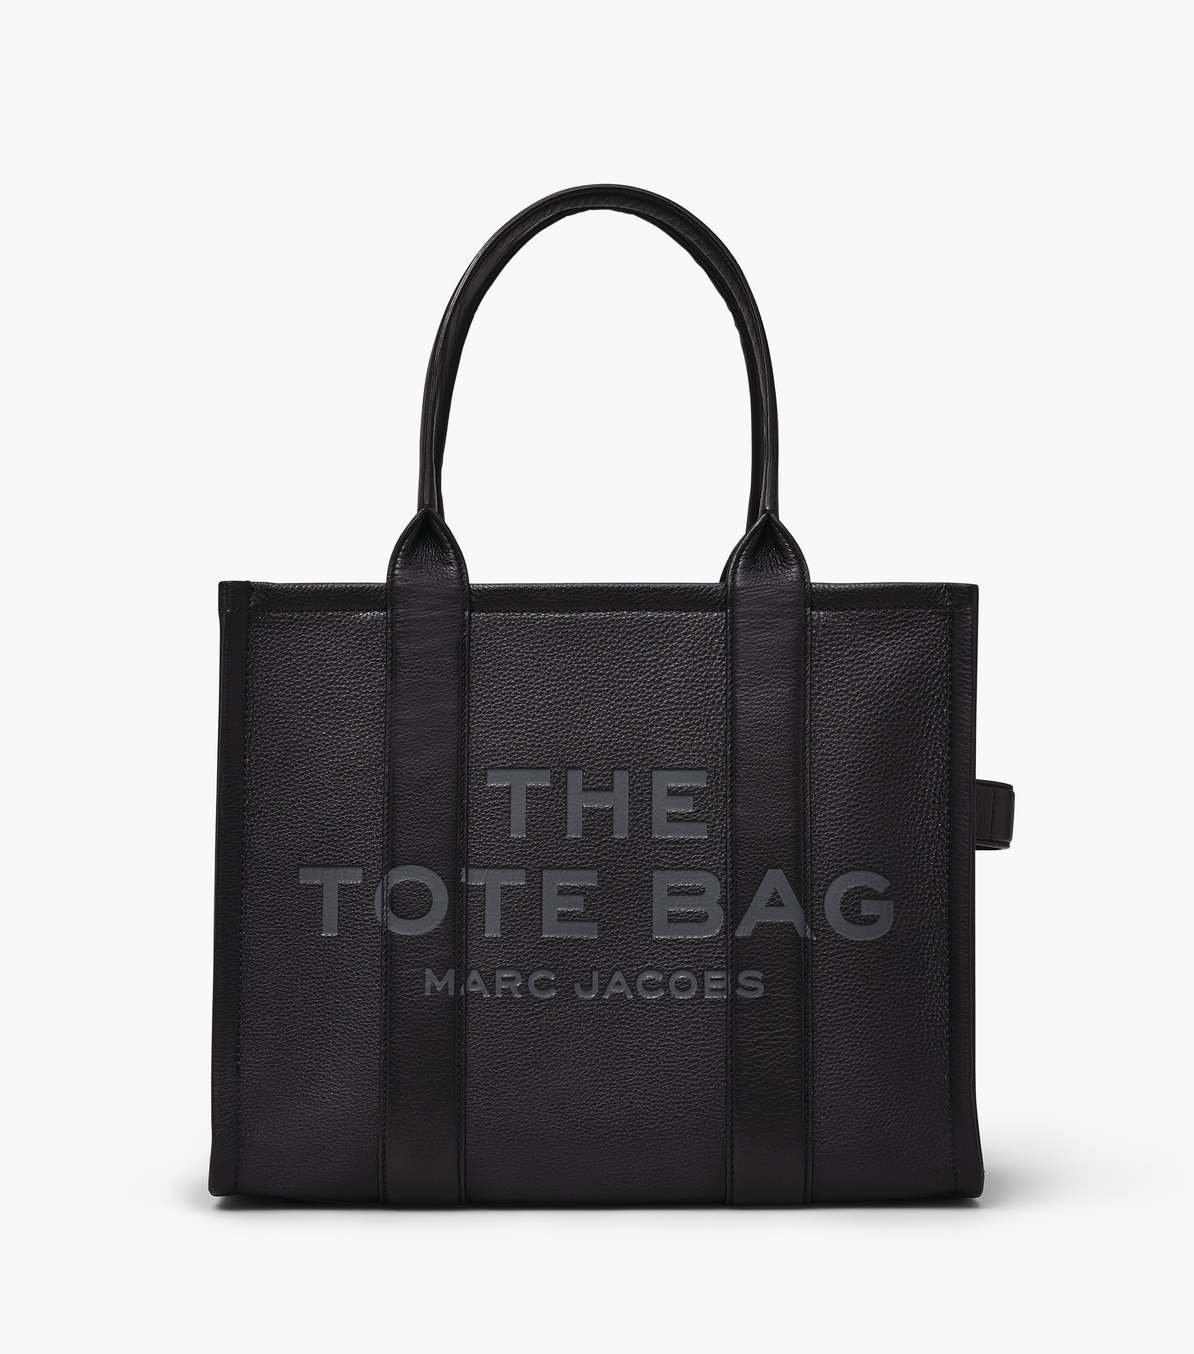 Marc JACOBS the tote bag - ayanawebzine.com